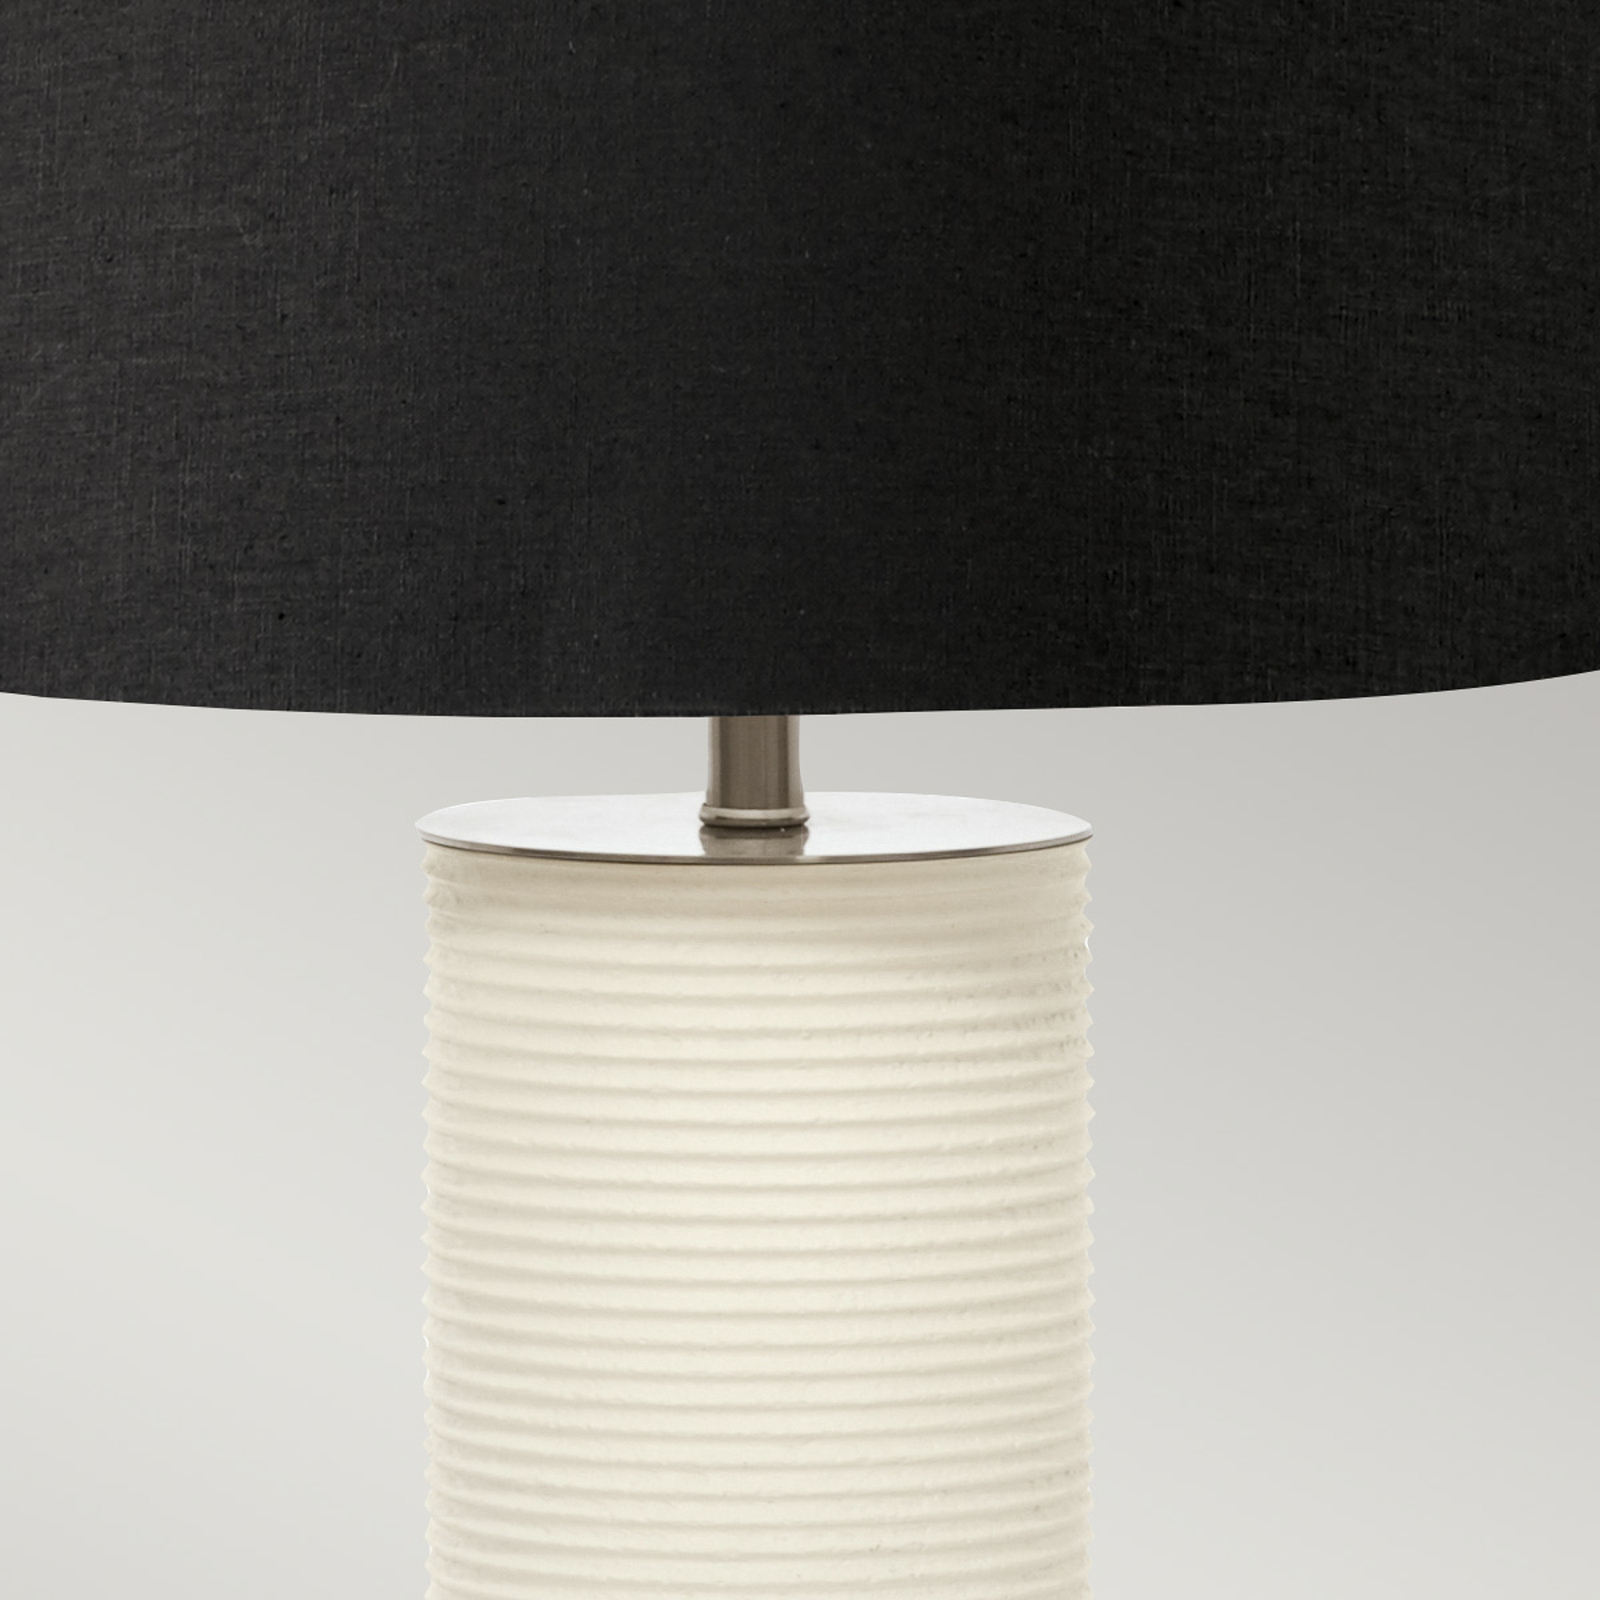 Ripple fabric table white base/black lampshade